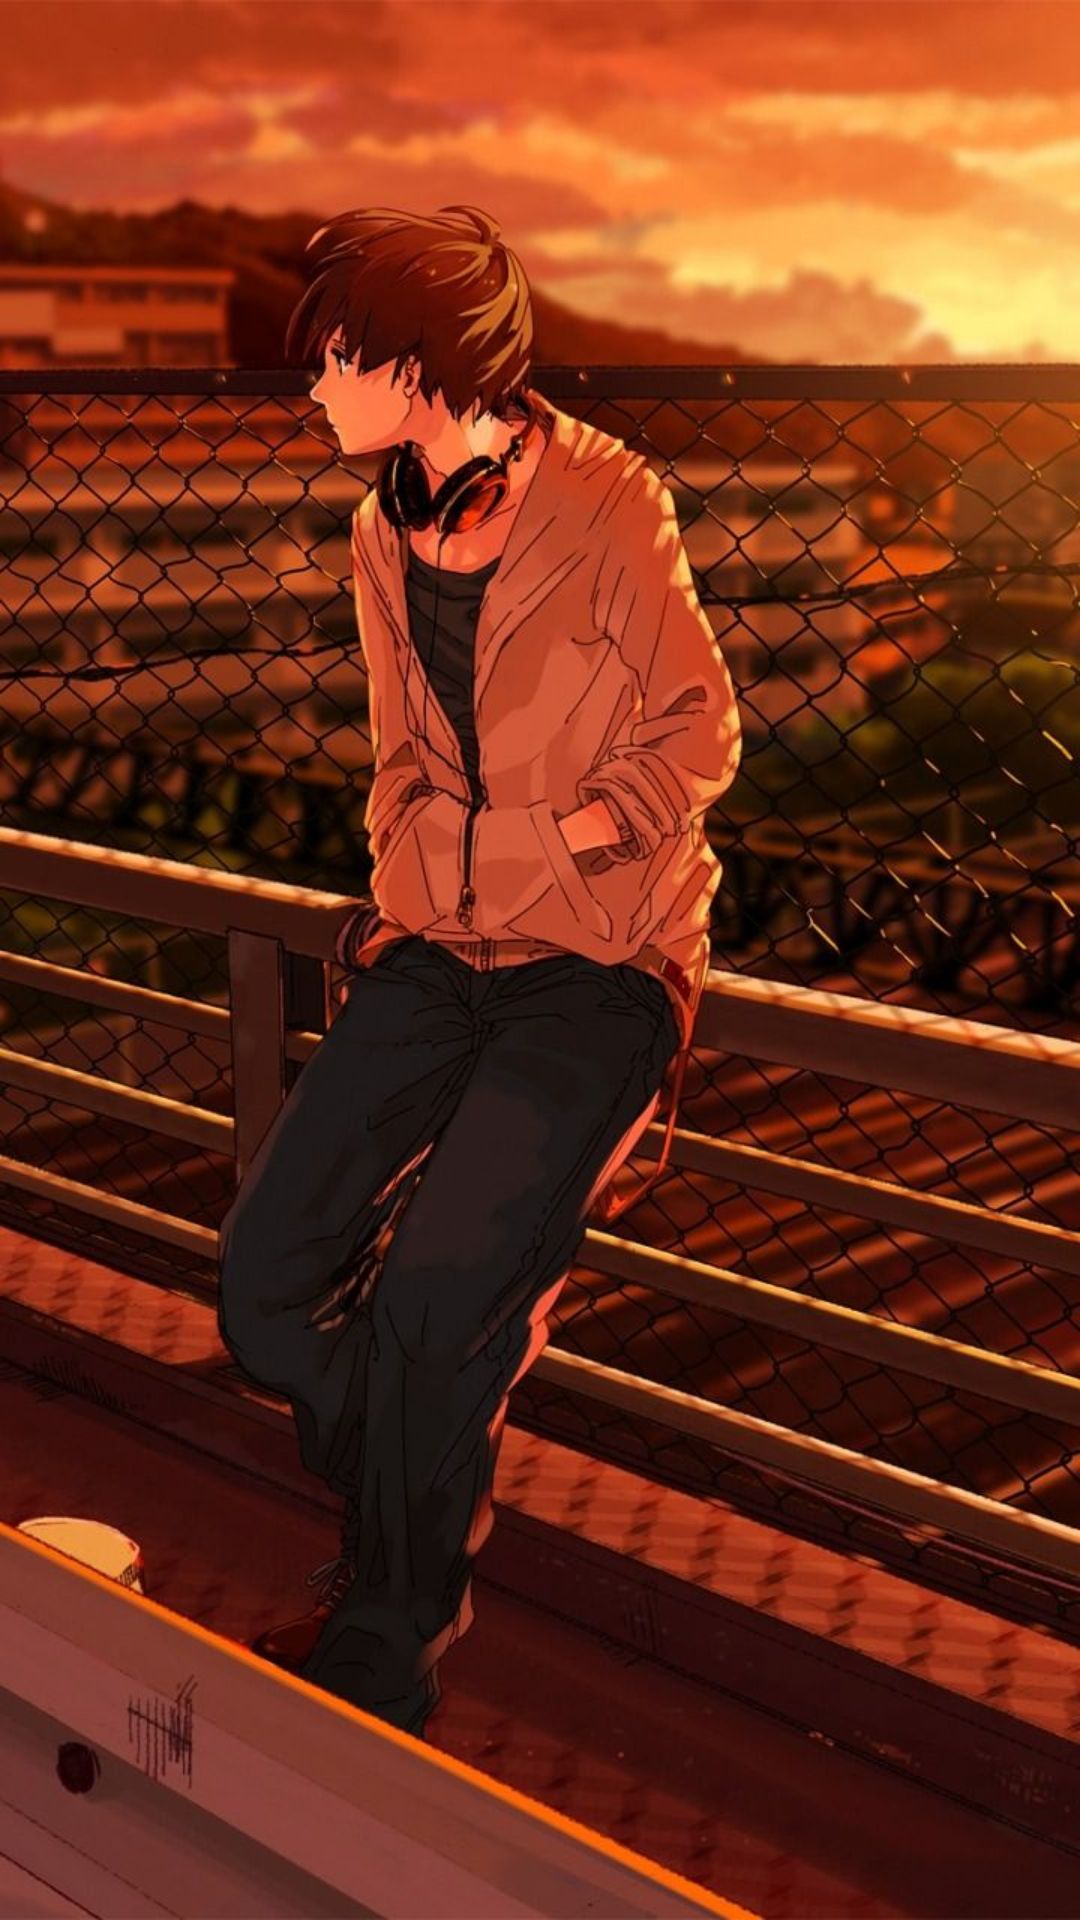 Sad Anime Boy iPhone Wallpaper, Anime Wallz